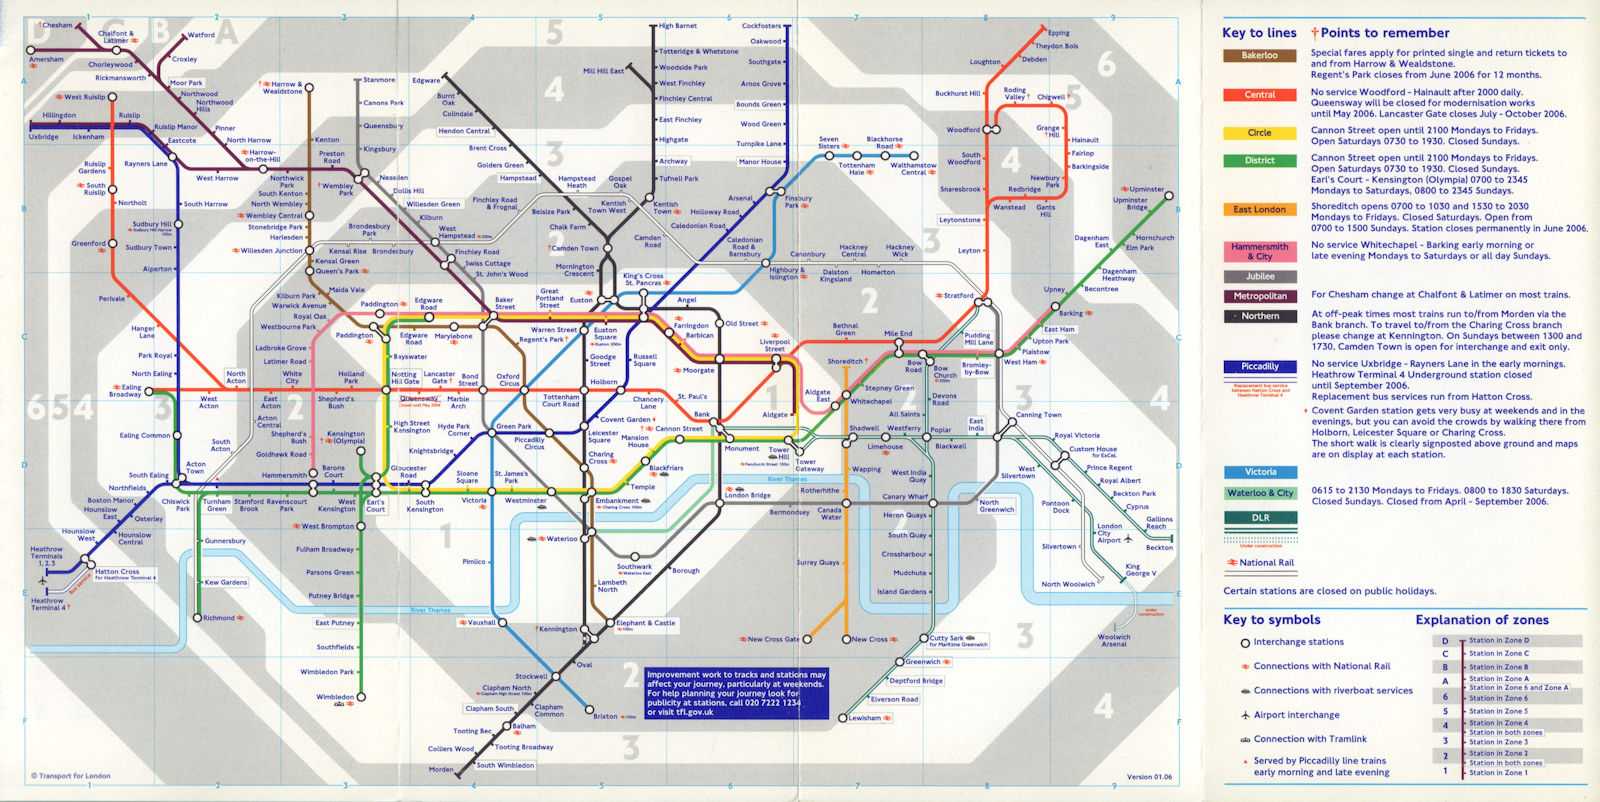 LONDON UNDERGROUND tube map. DLR King George V open. LHR T4 shut. February 2006